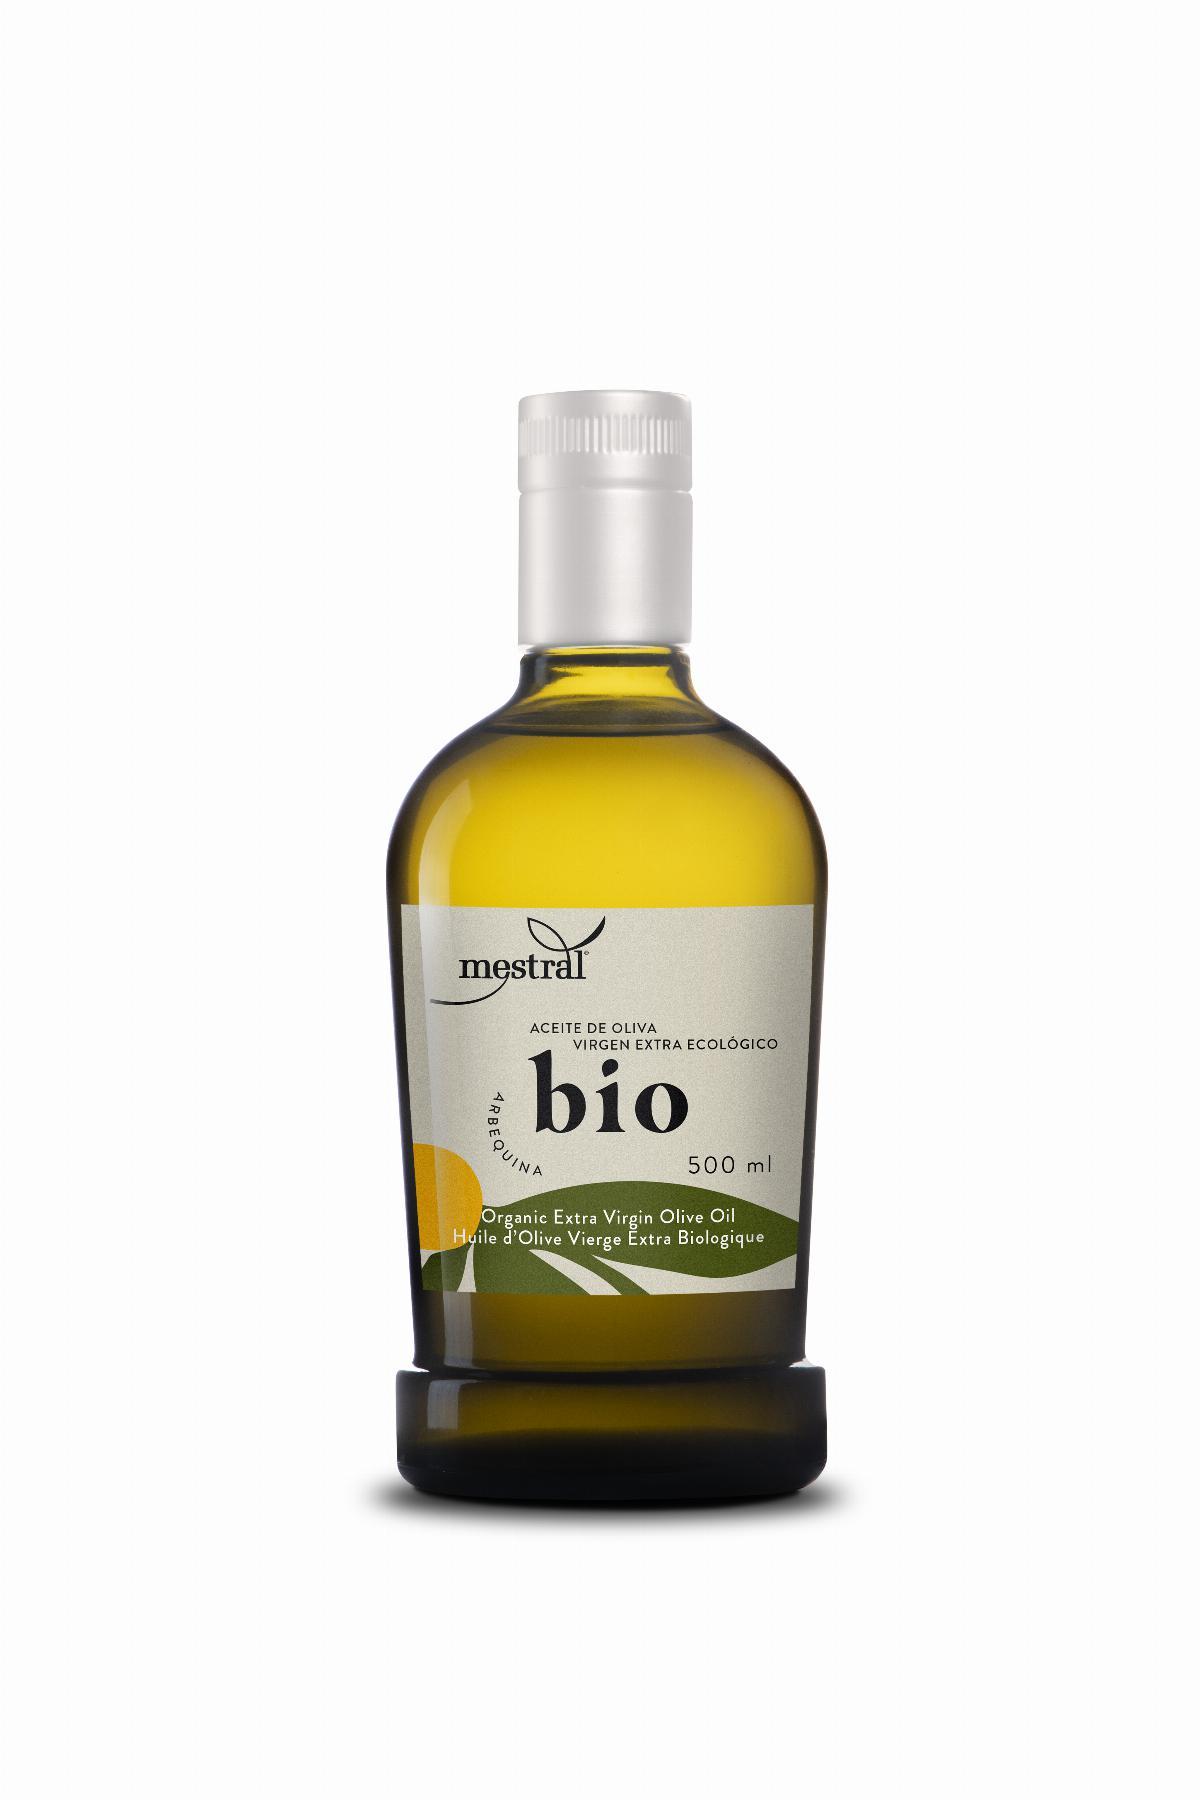 Olis i infusionats - Oli d'oliva Verge Extra Mestral BIO agric ecològica amp.500mL 100% Arbequina - Mestral Cambrils